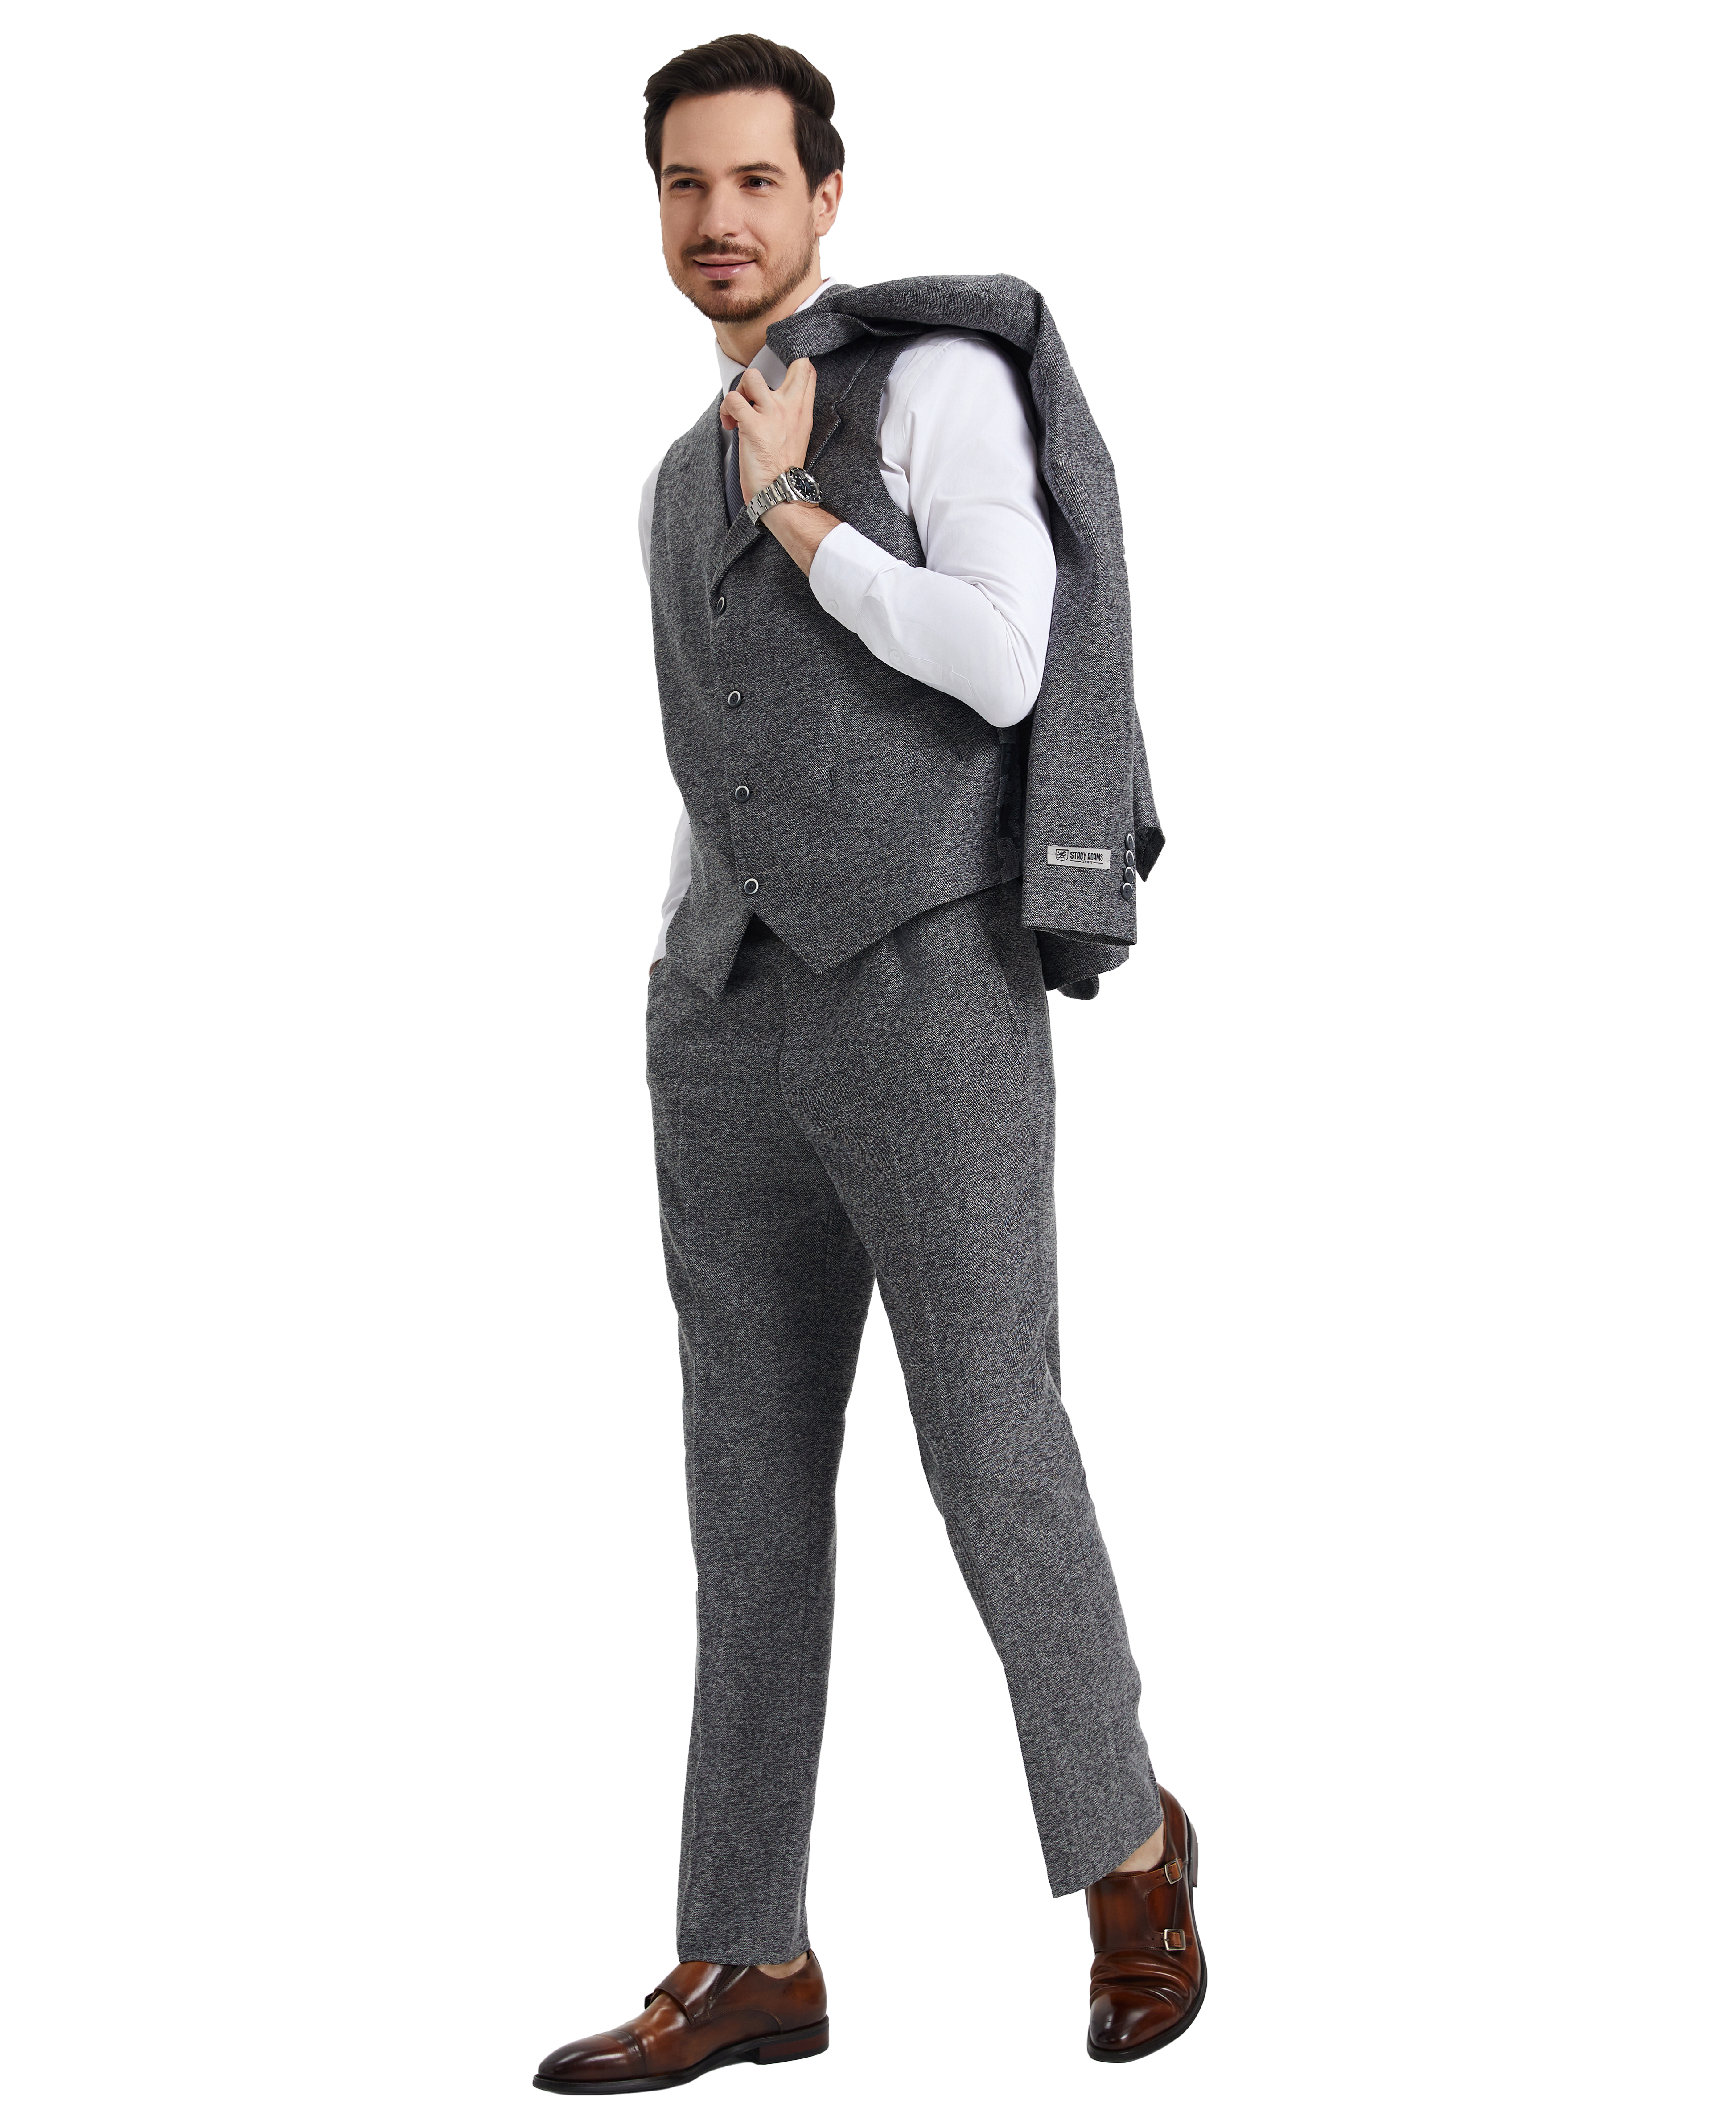 Stacy Adams Hybrid-Fit Vested Suit, Grey Tweed